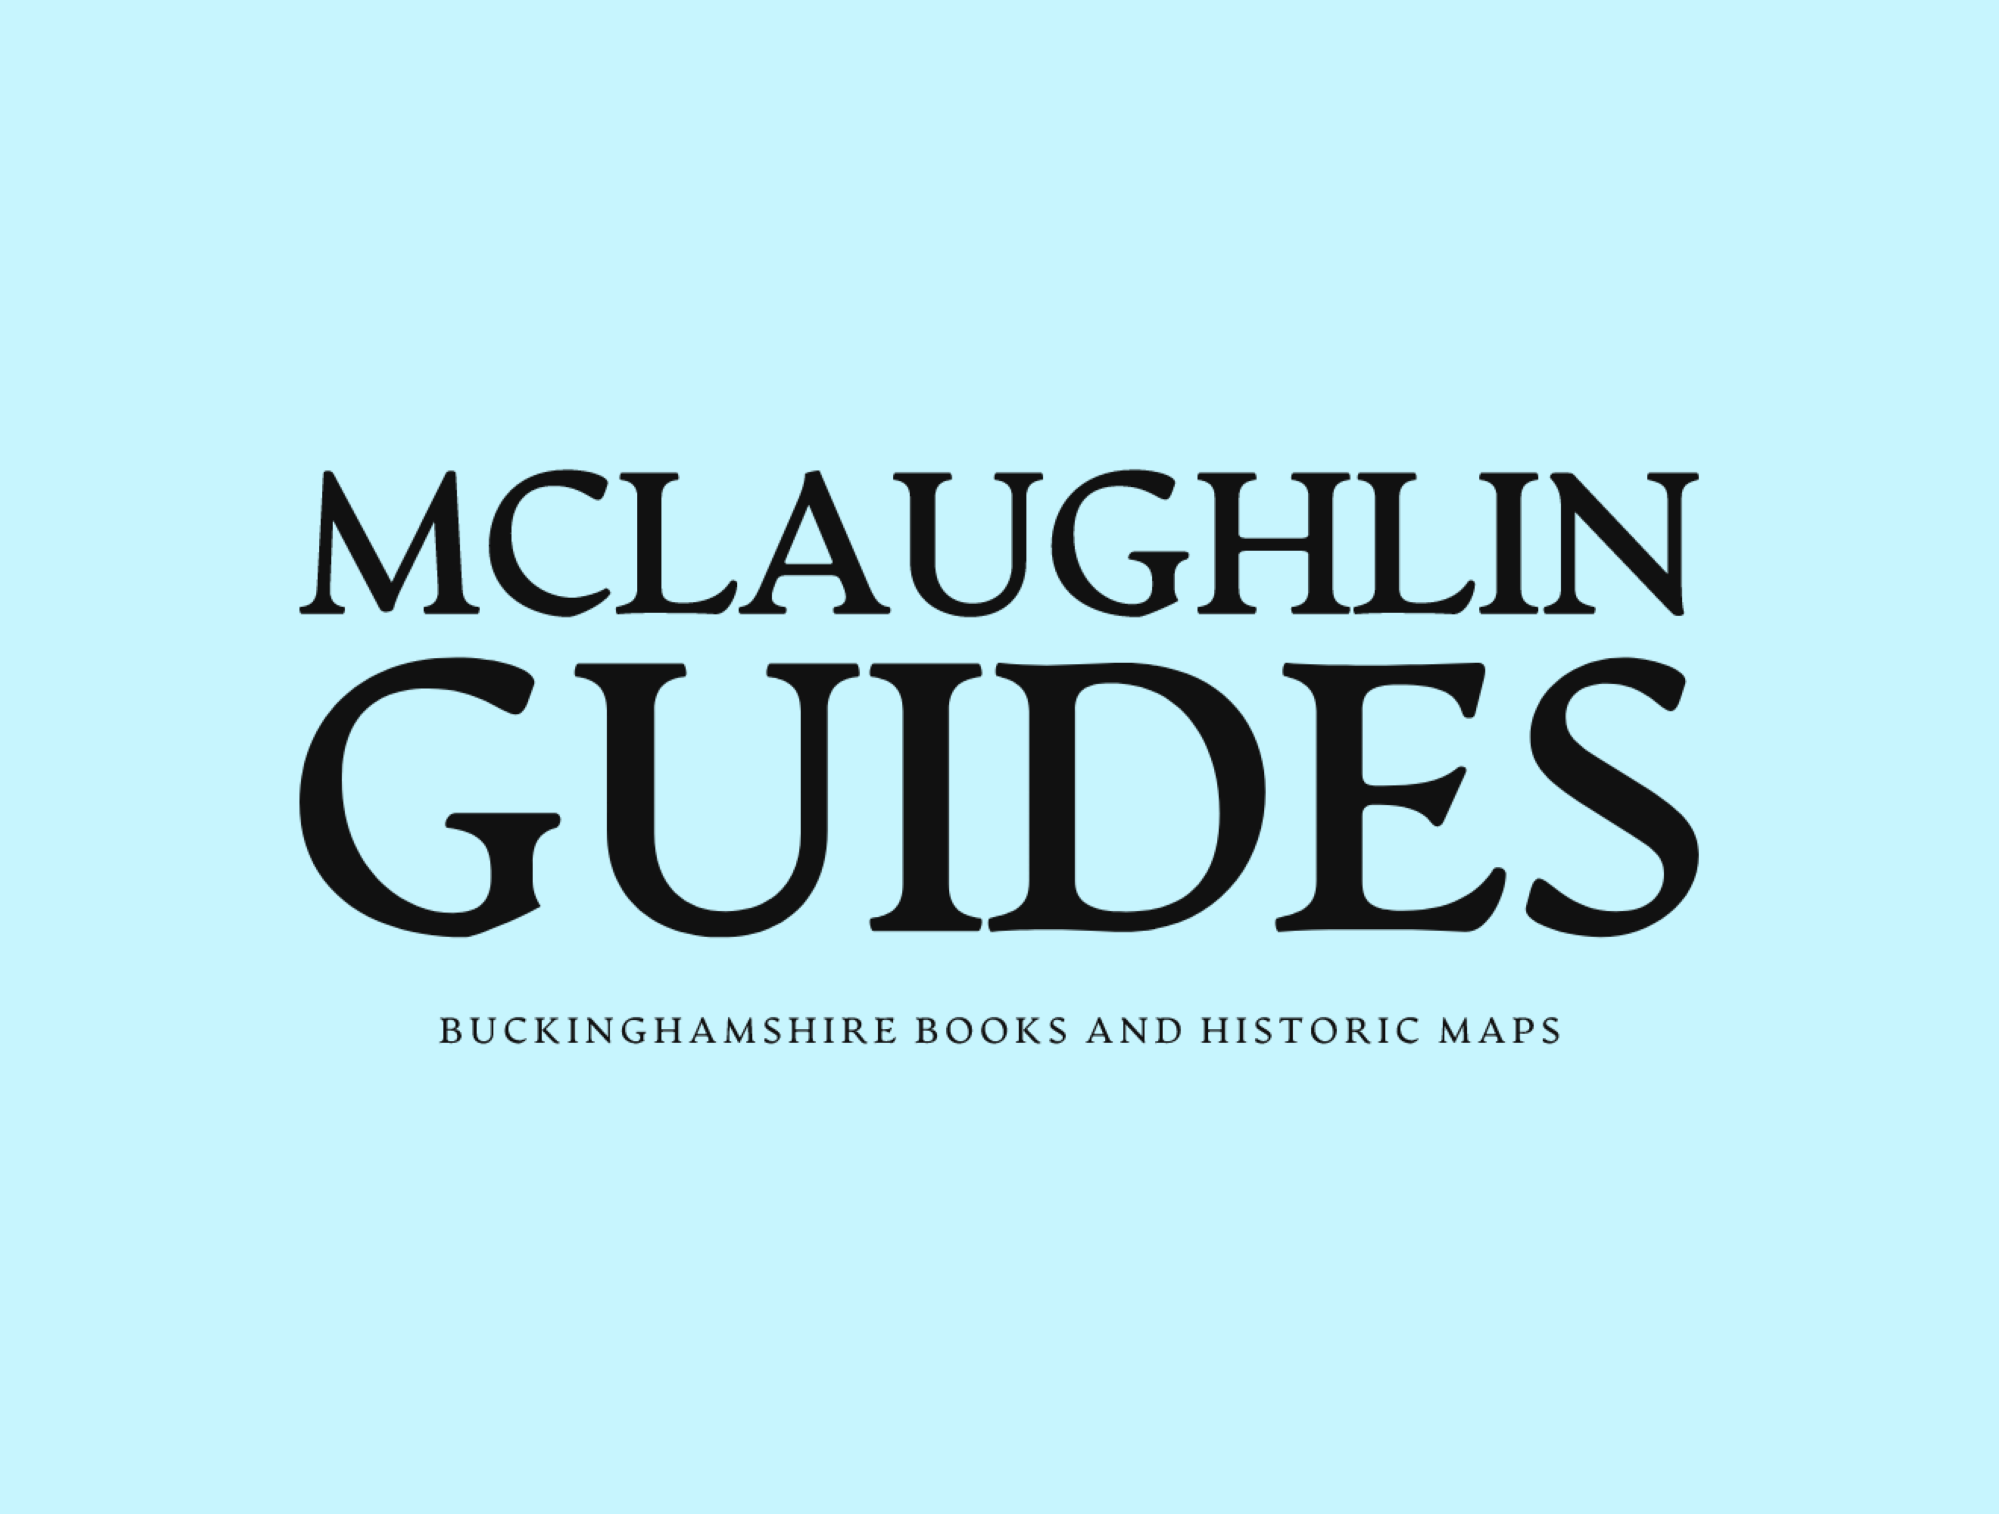 The McLaughlin Guides